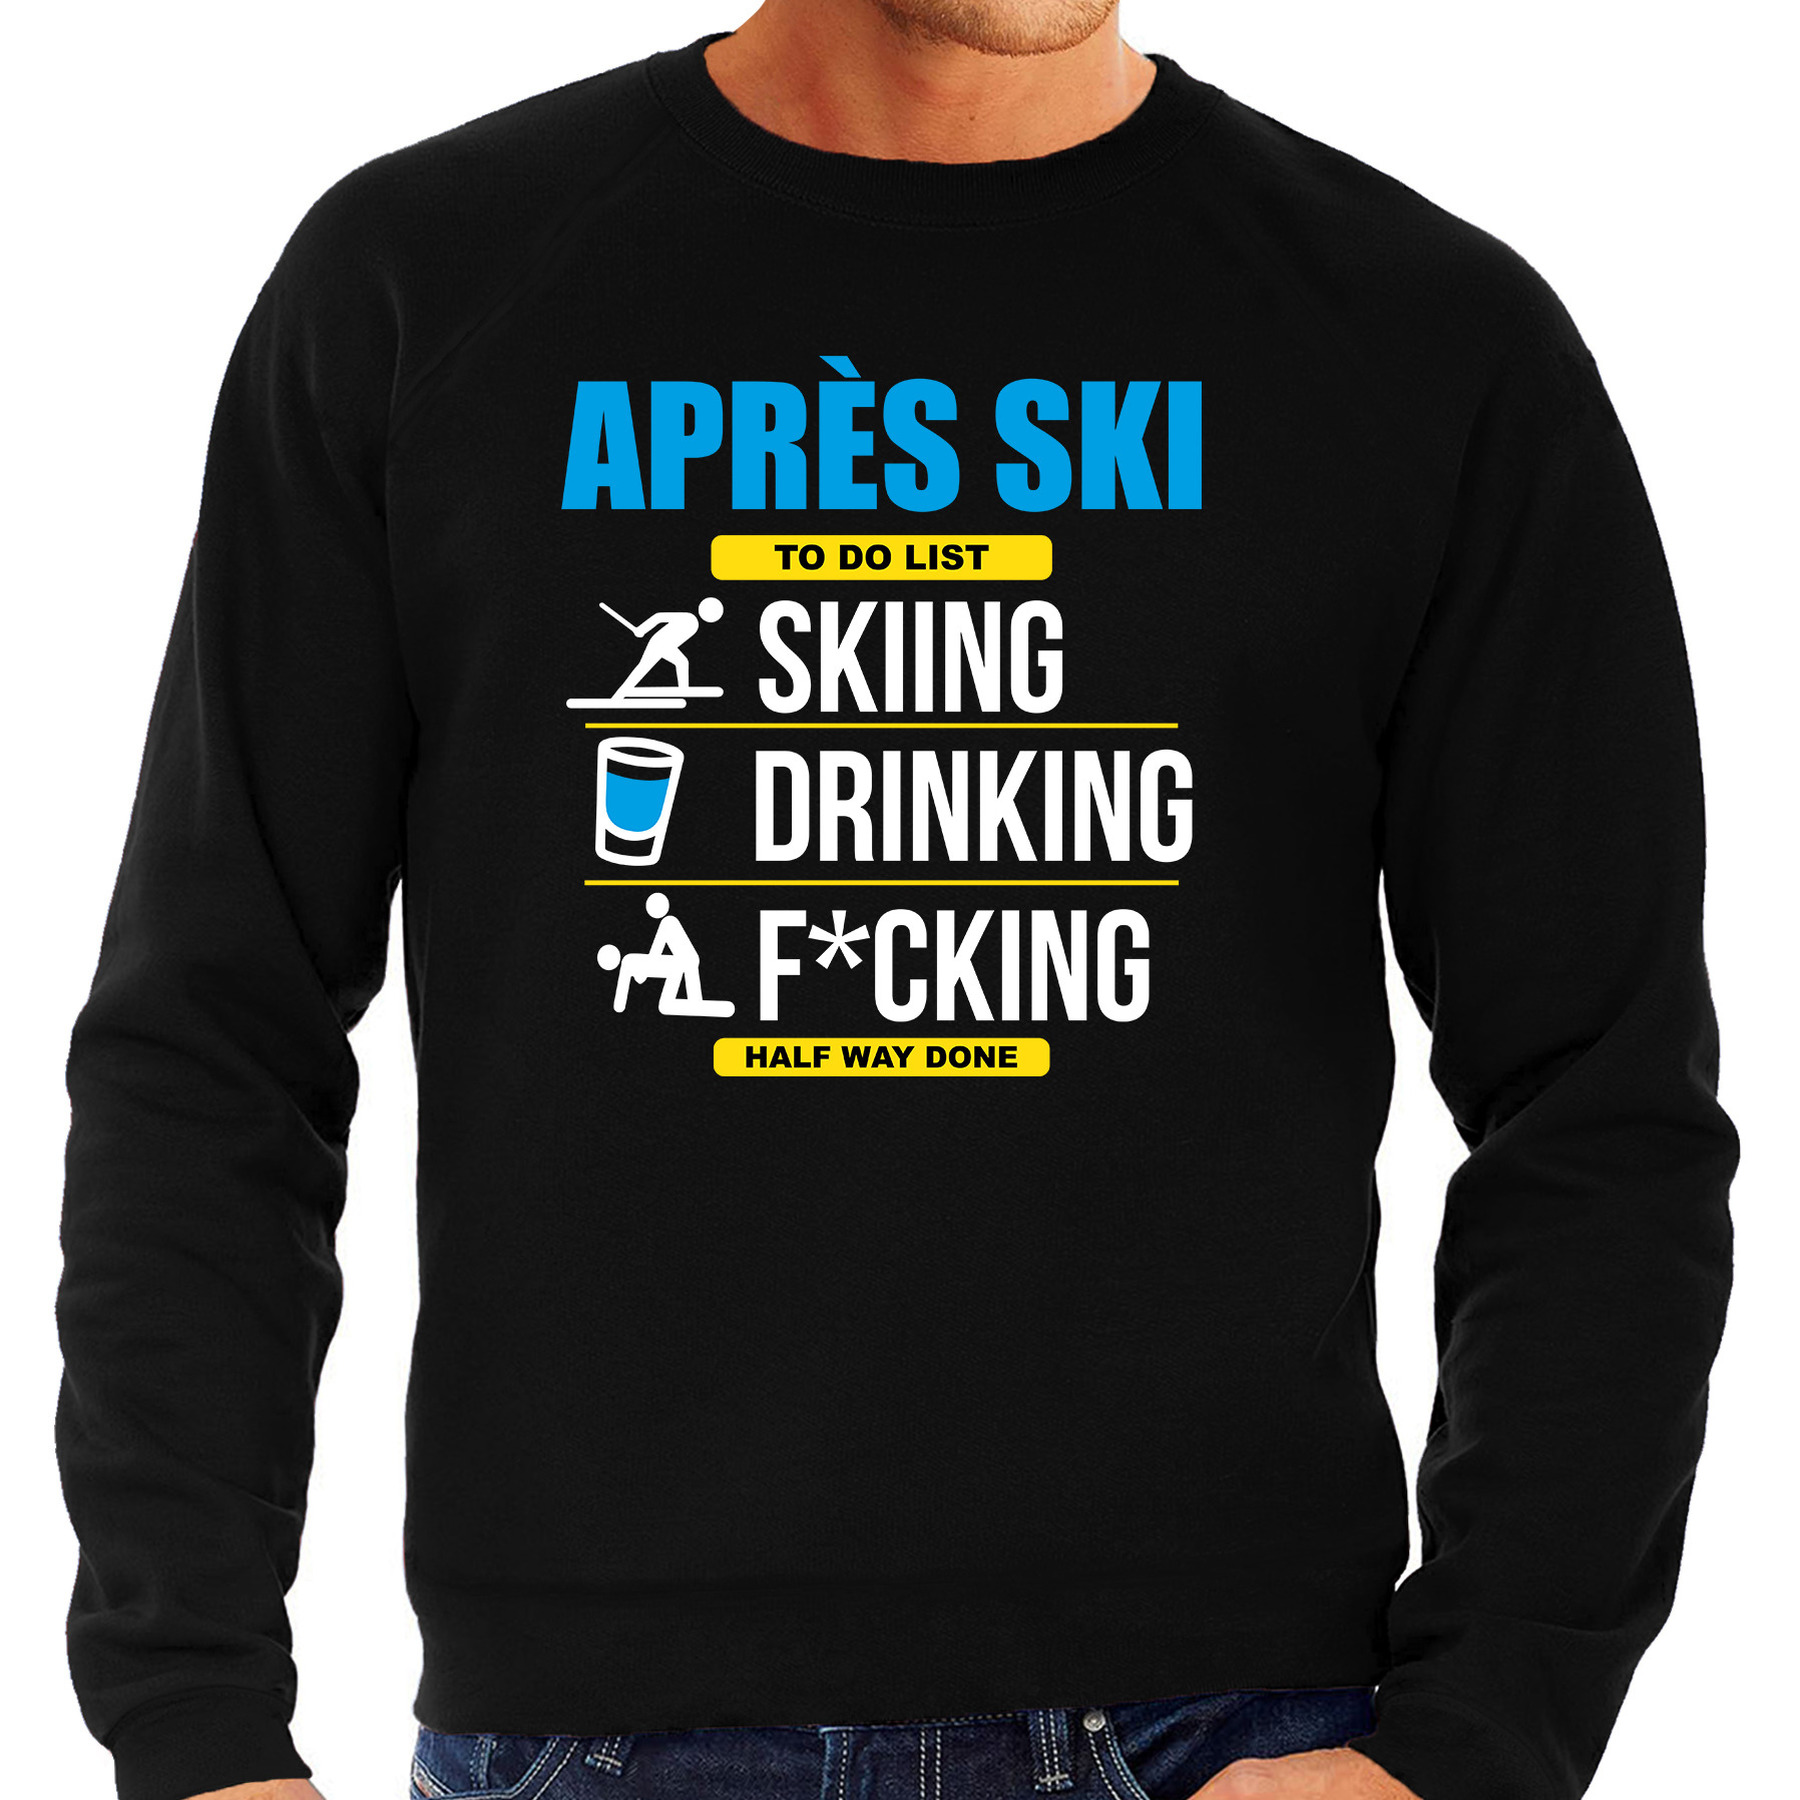 Apres ski trui to do list skieen zwart heren Wintersport sweater Foute apres ski outfit